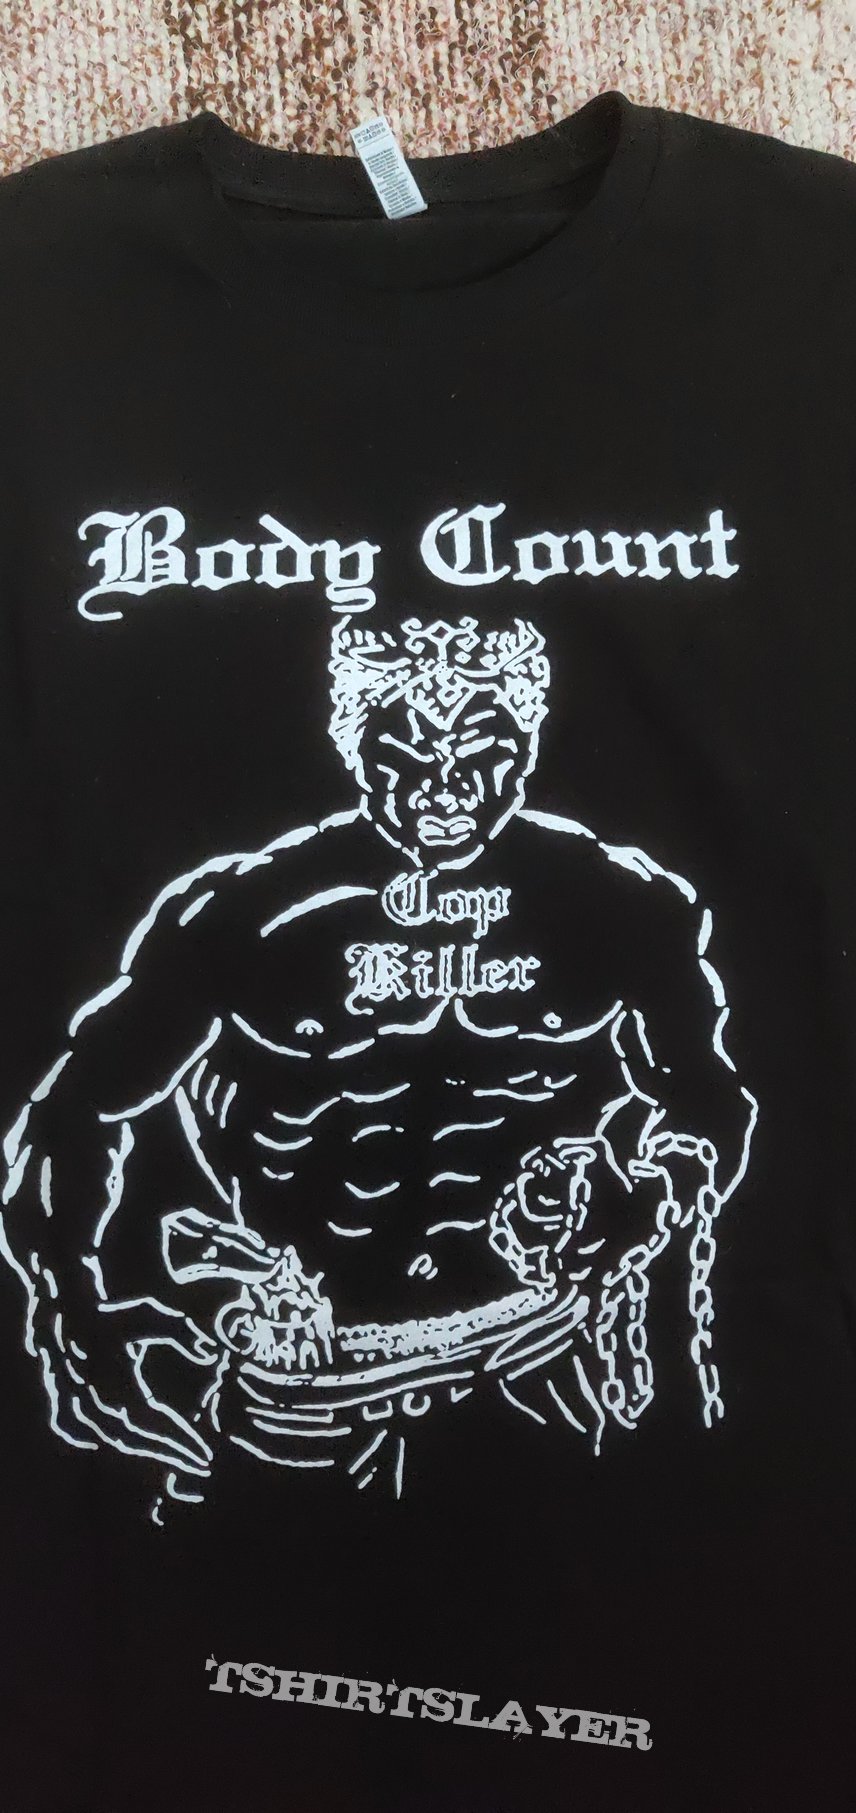 Body Count Reprint